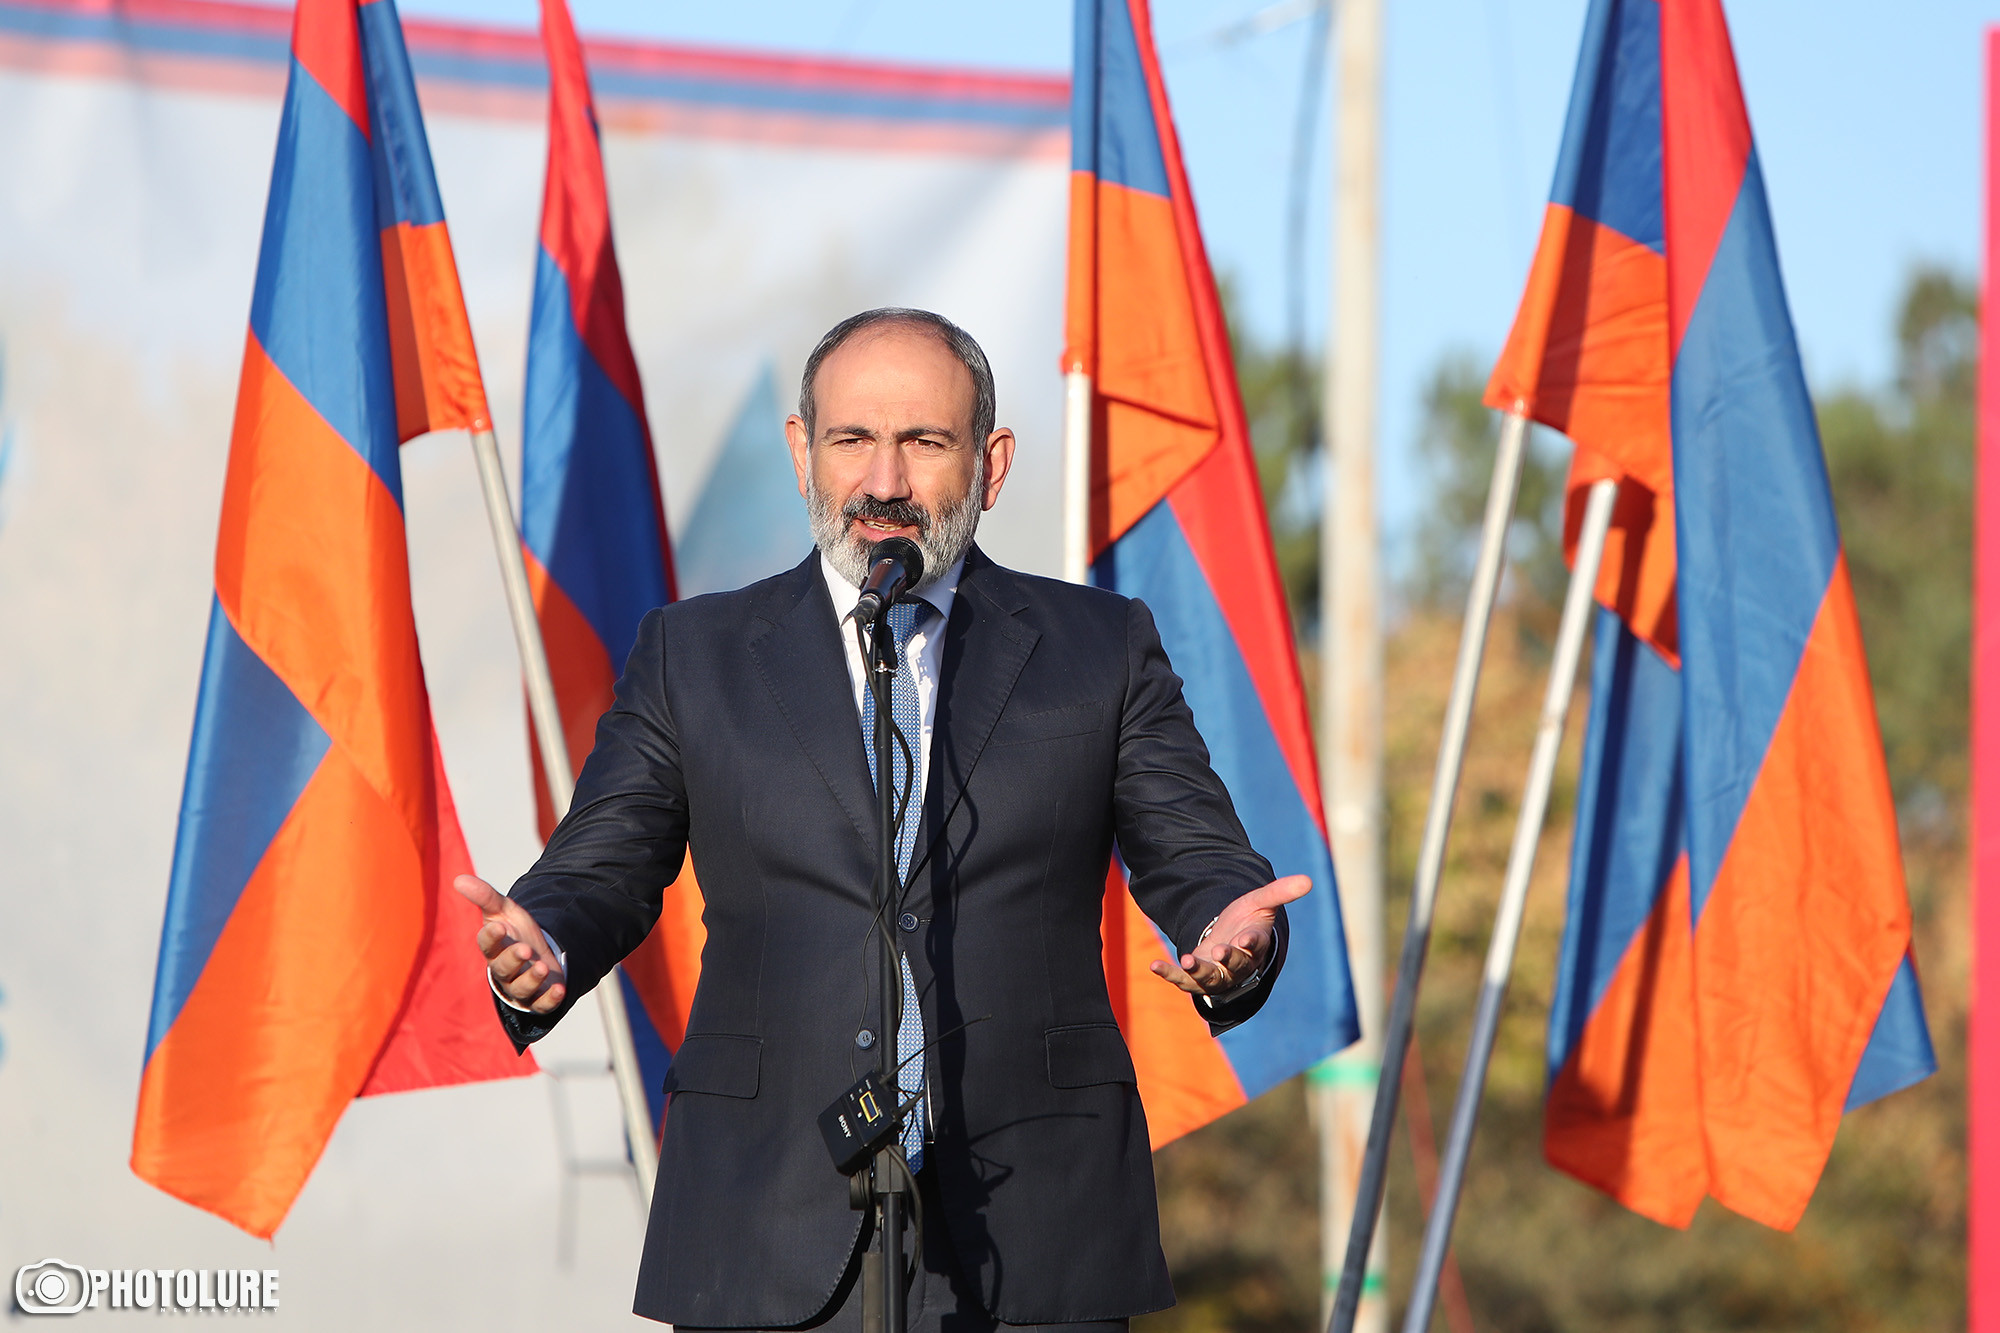 Pashinyan calls for further democratization in Armenia, peace in region